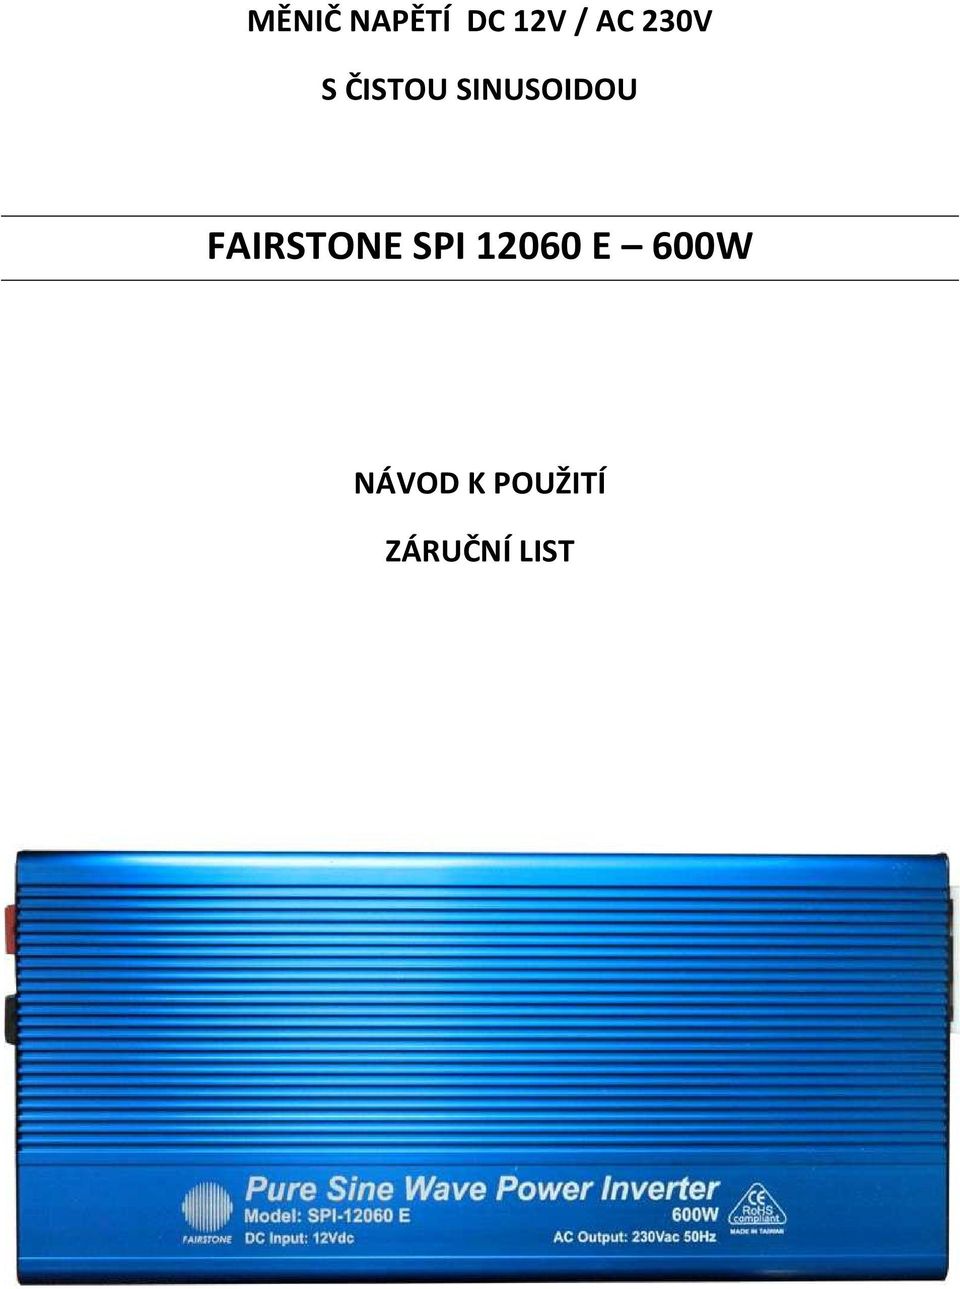 FAIRSTONE SPI 12060 E 600W